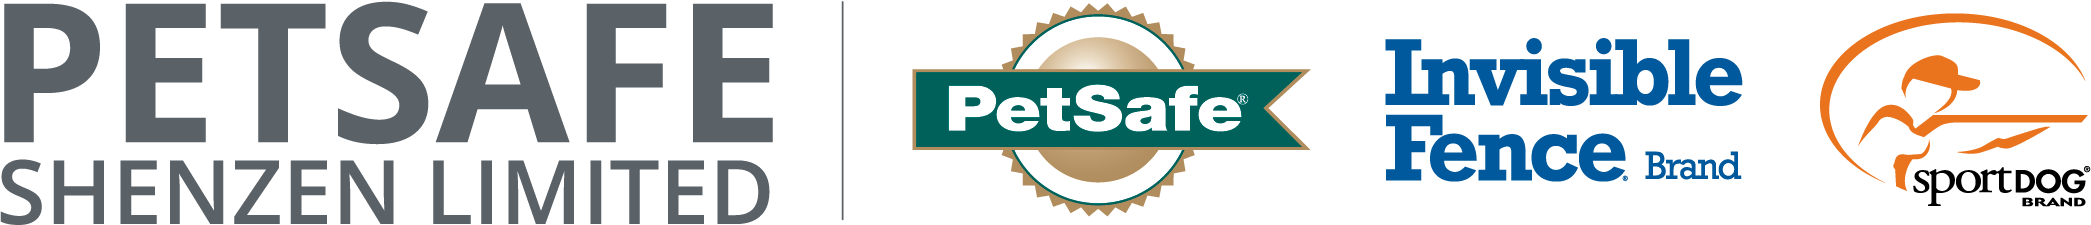 PetSafe Shenzhen Limited